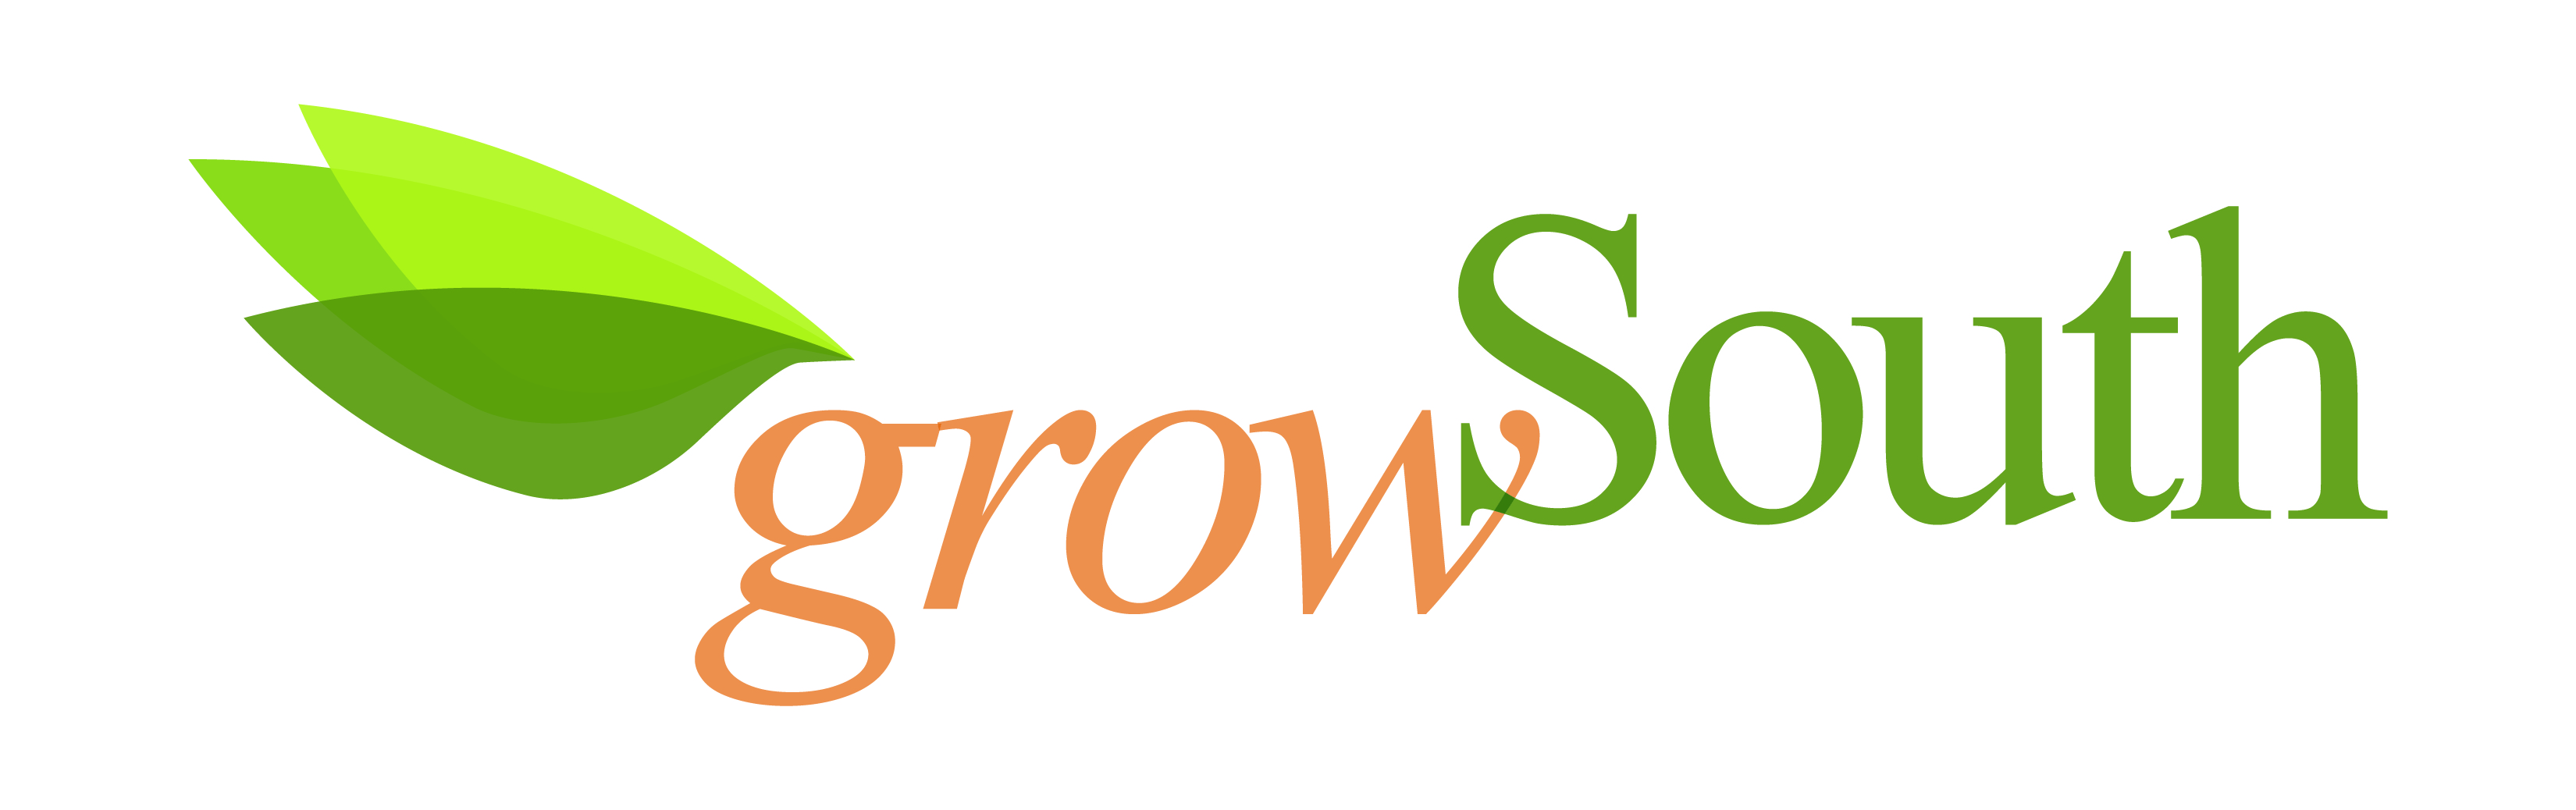 GrowSouth Logo - newGreen-01.jpg